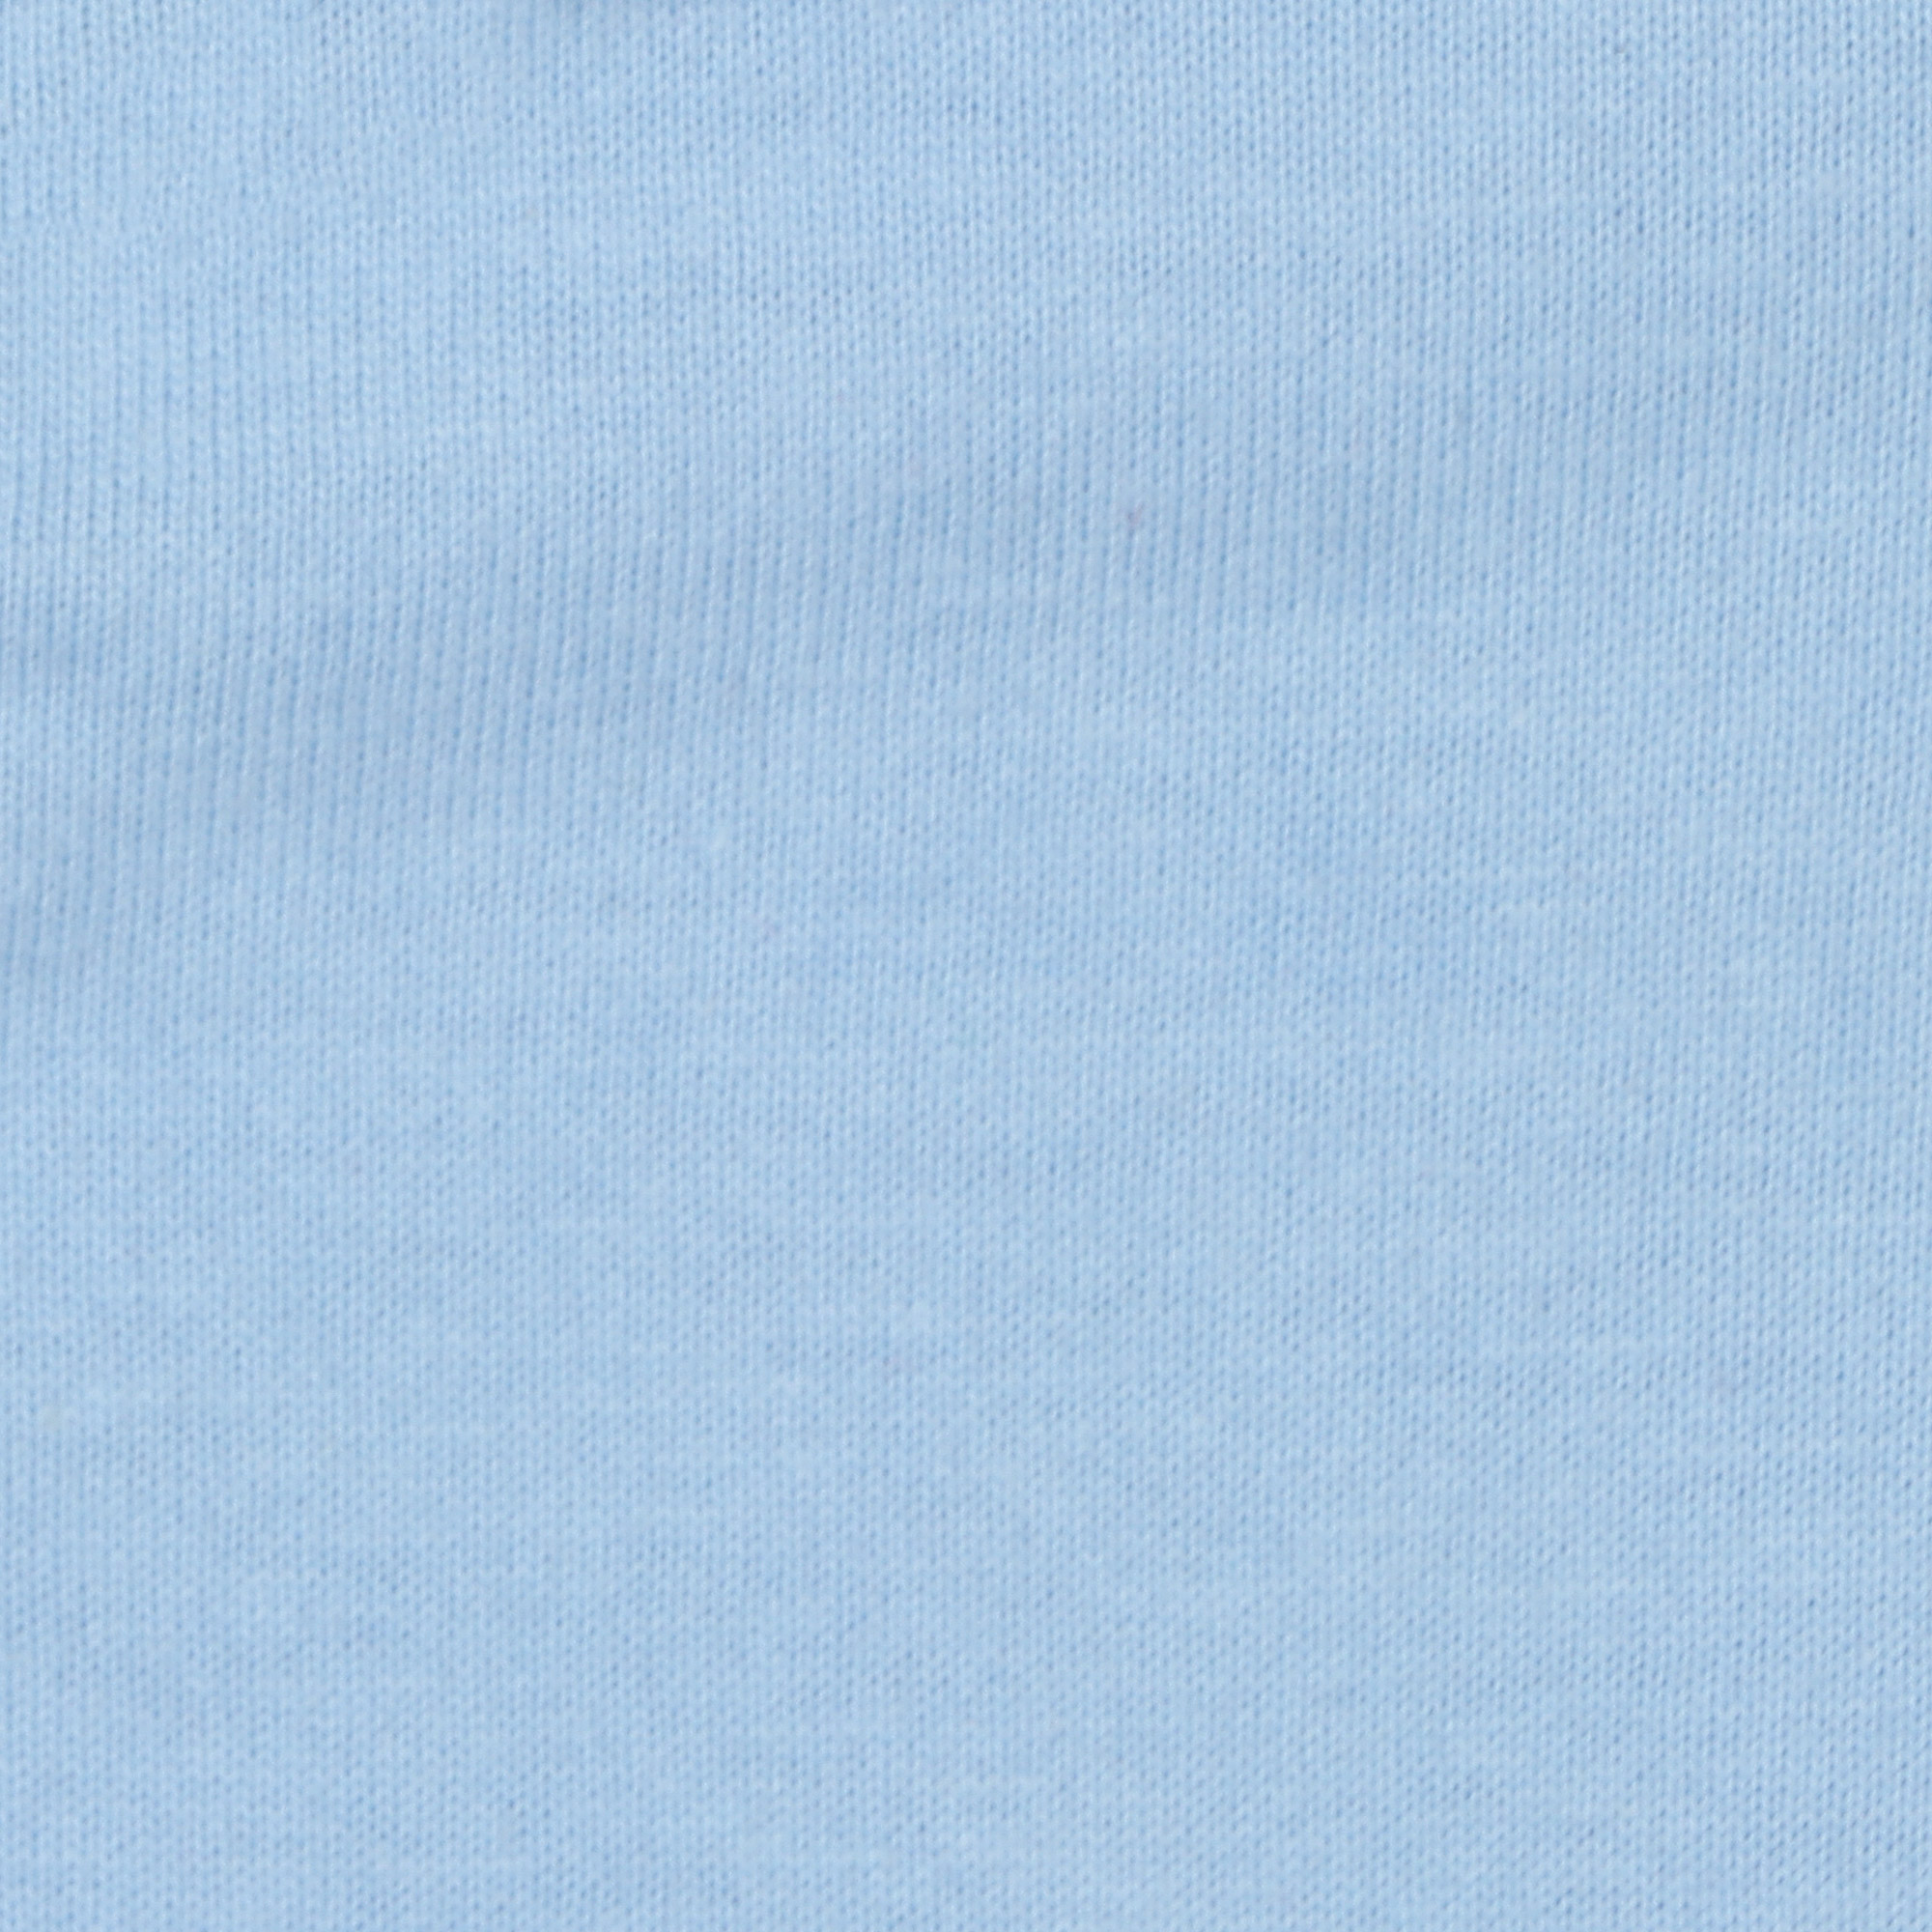 Футболка мужская M-1 Promo голубая с коротким рукавом XXL, цвет голубой, размер XXL - фото 3